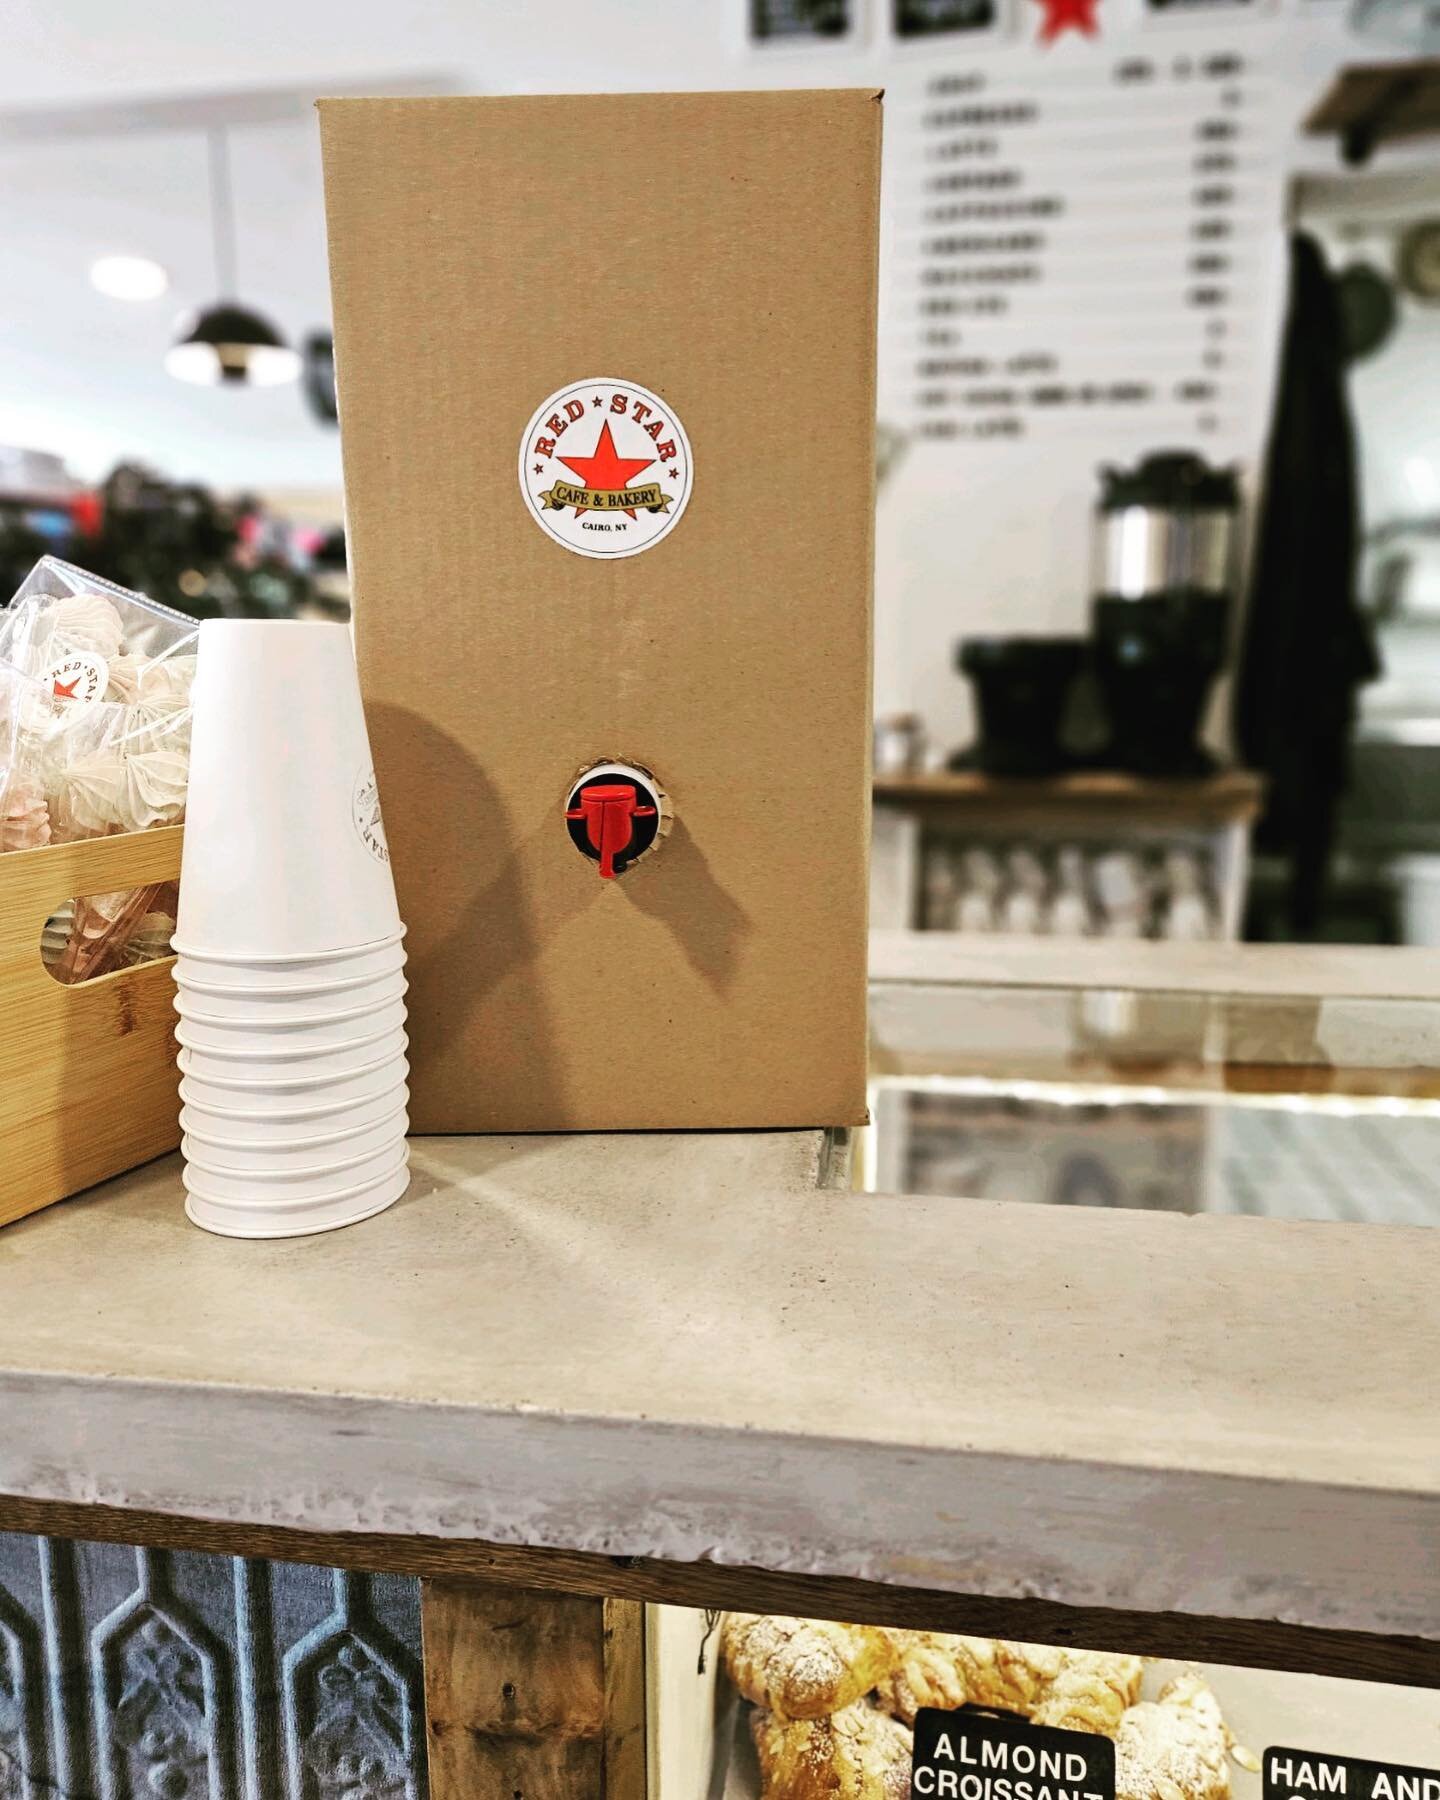 Need coffee for your crew? We got you! 👌#bestingreenecounty